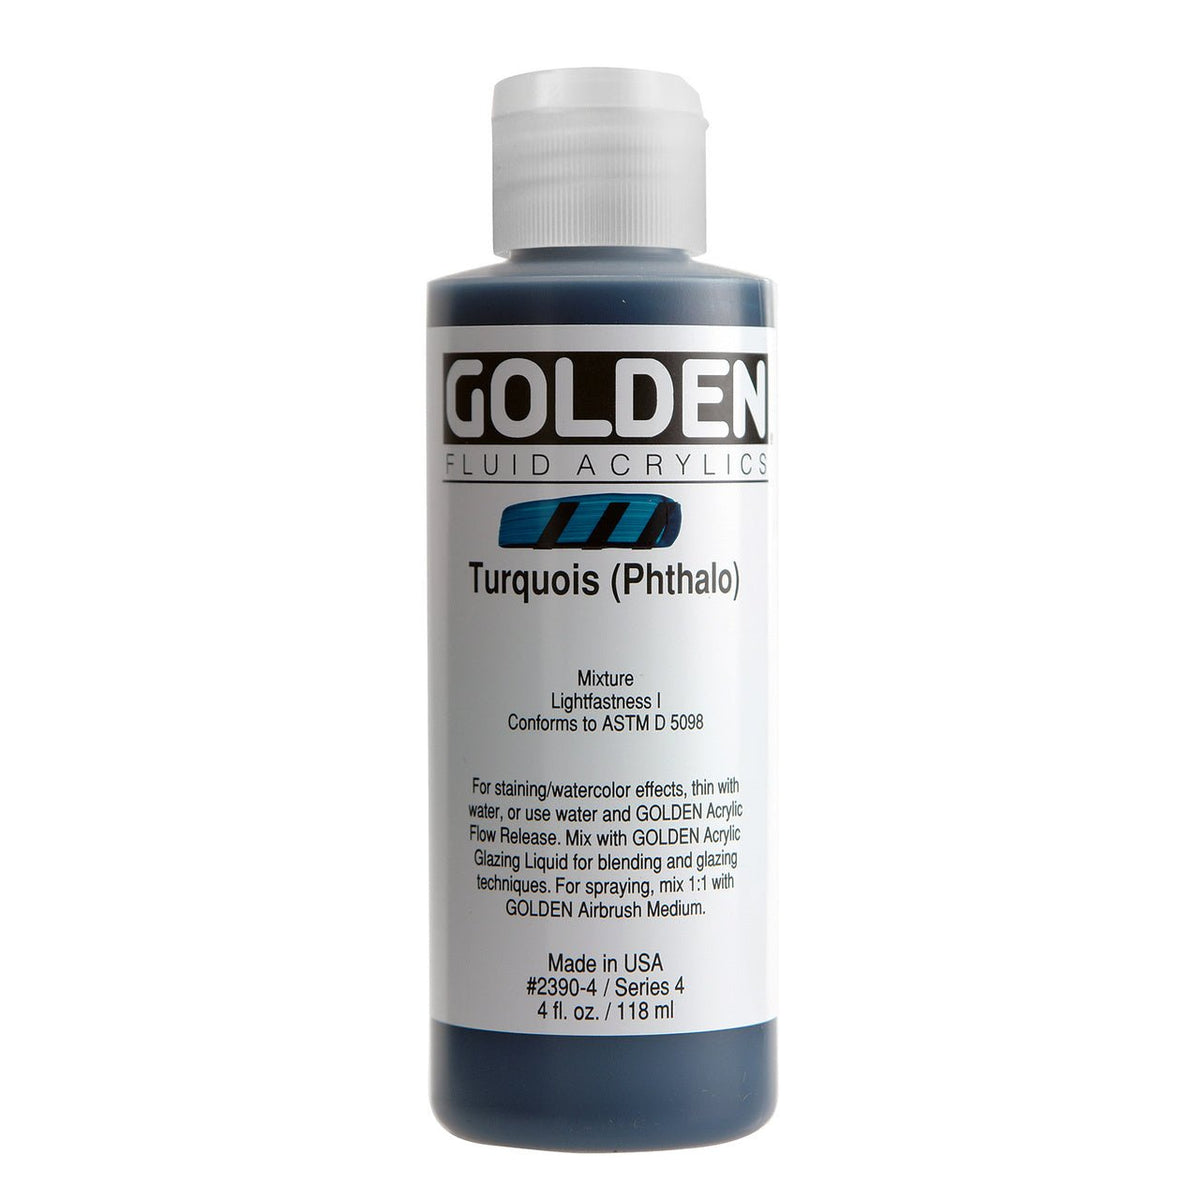 Golden Fluid Acrylic Turquoise (Phthalo) 4 oz - merriartist.com